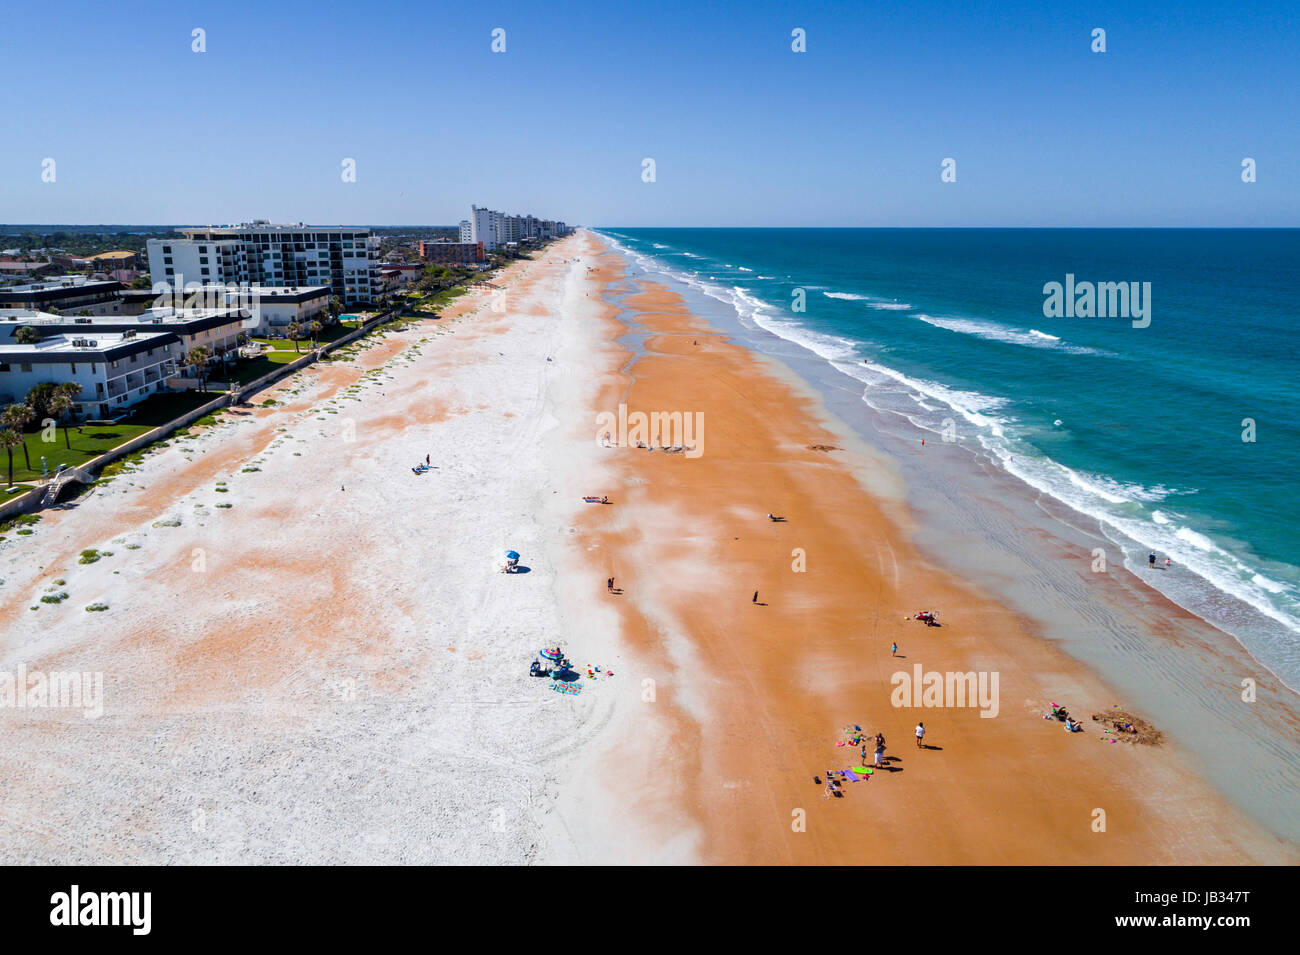 Florida Ormond Beach by the Sea, Oceano Atlantico, fronte mare, vista aerea dall'alto, onde, FL170510d04 Foto Stock